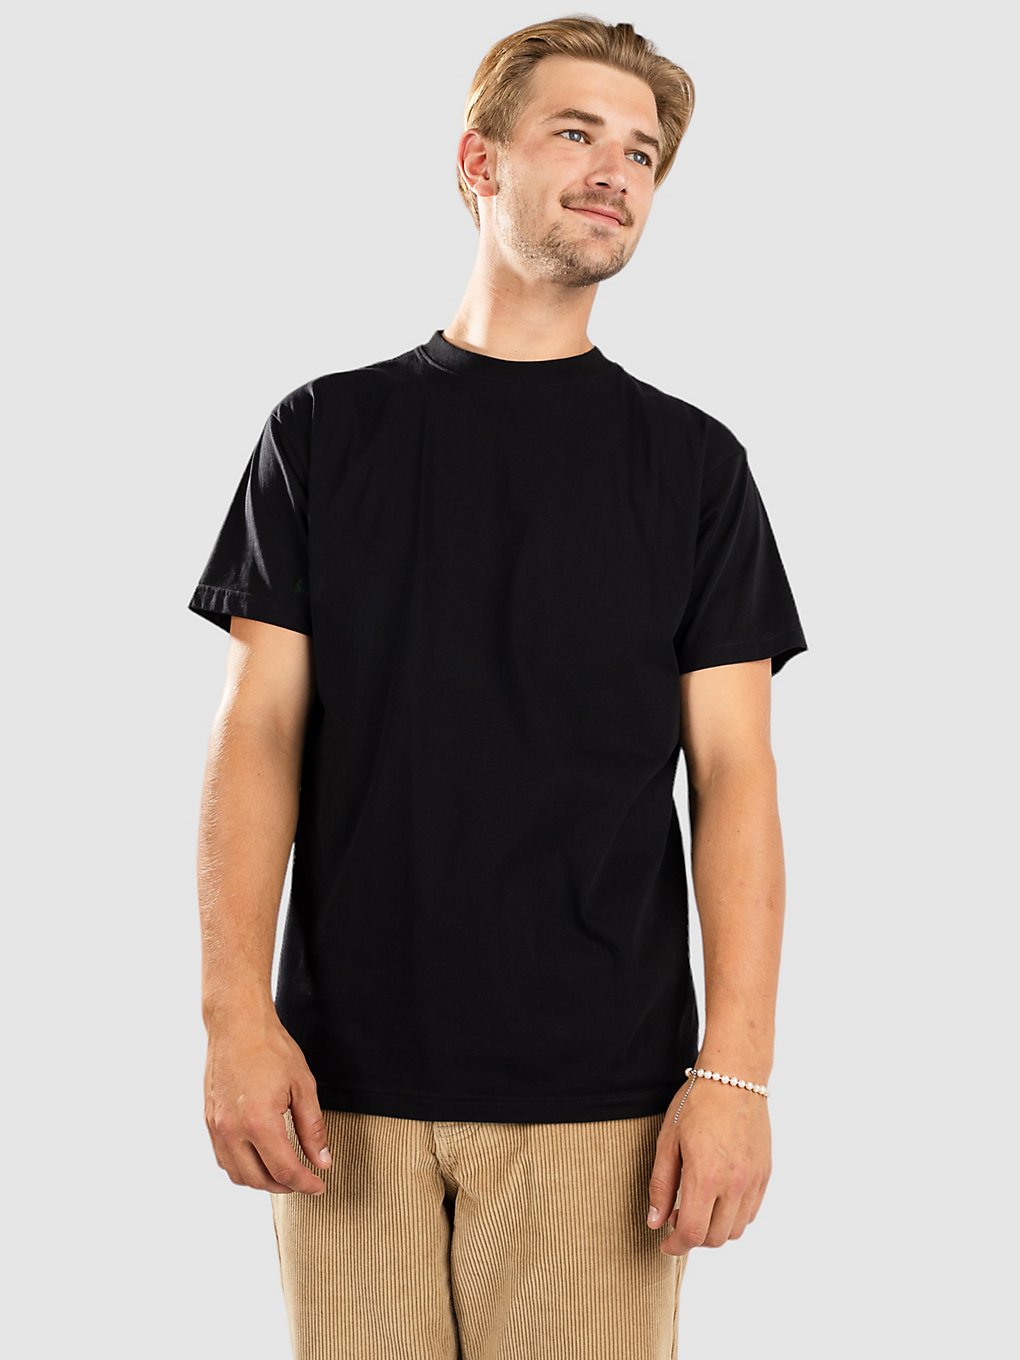 Taikan Organic T-Shirt black kaufen